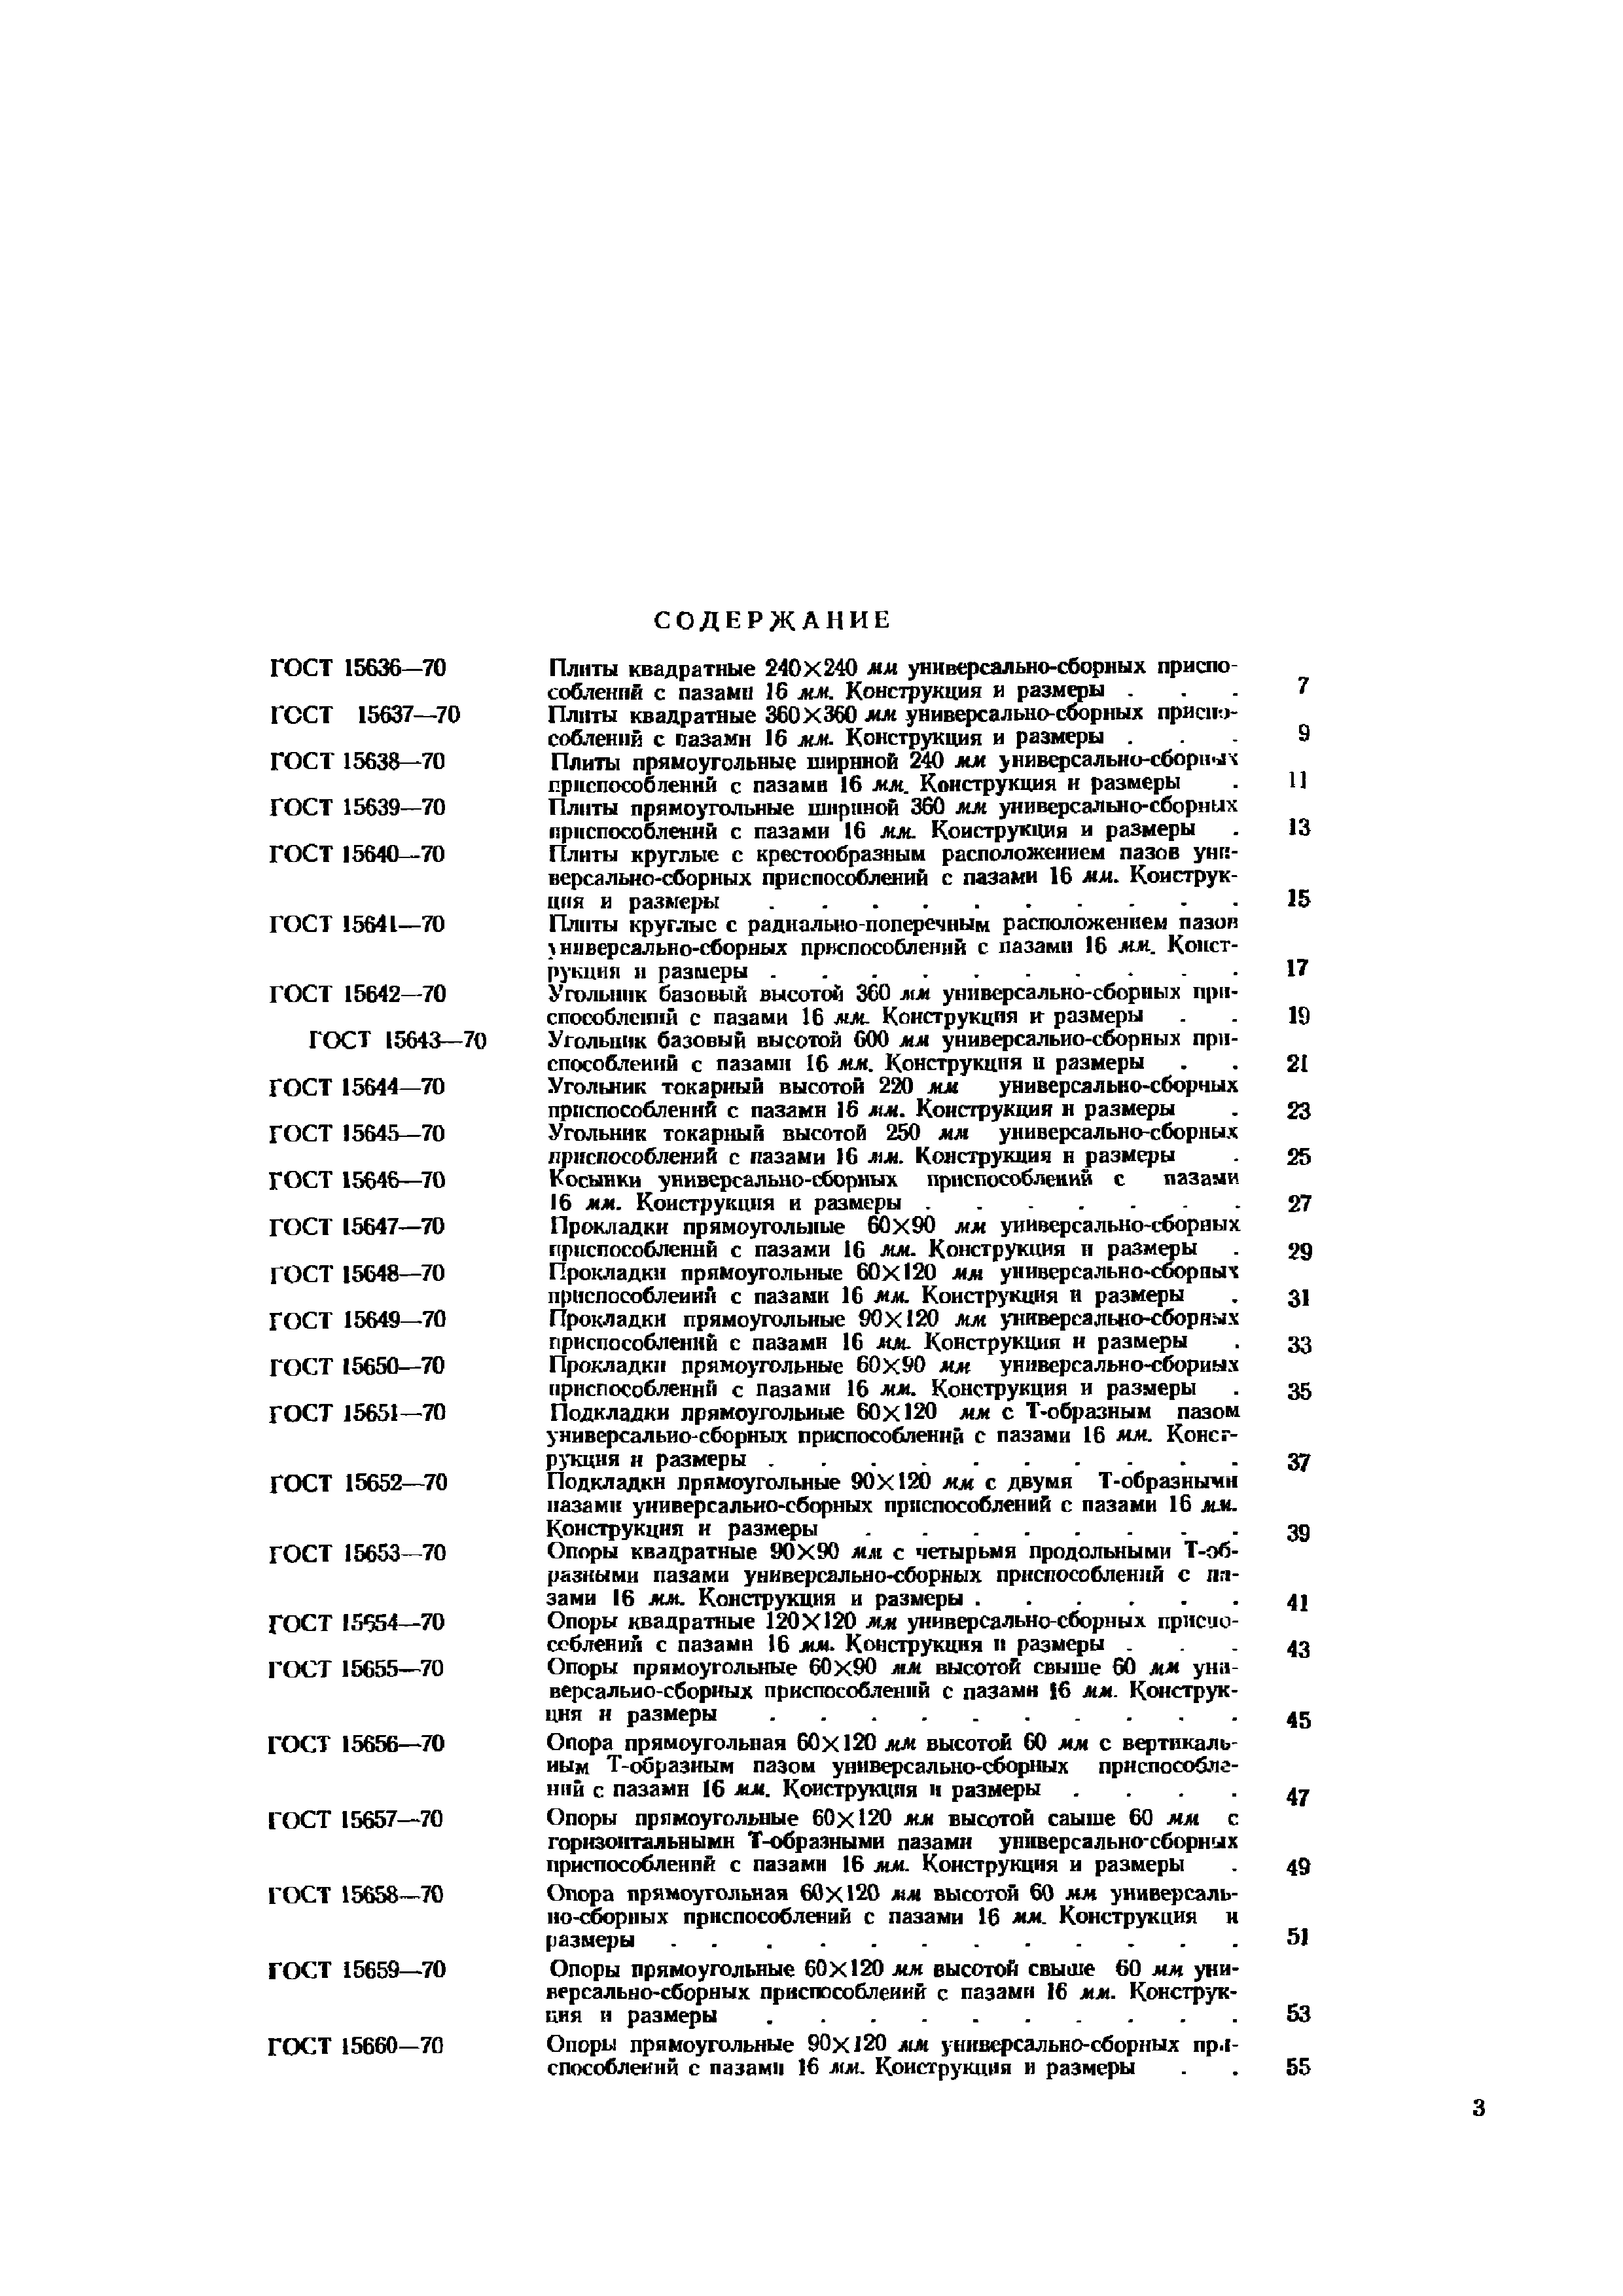 ГОСТ 15721-70